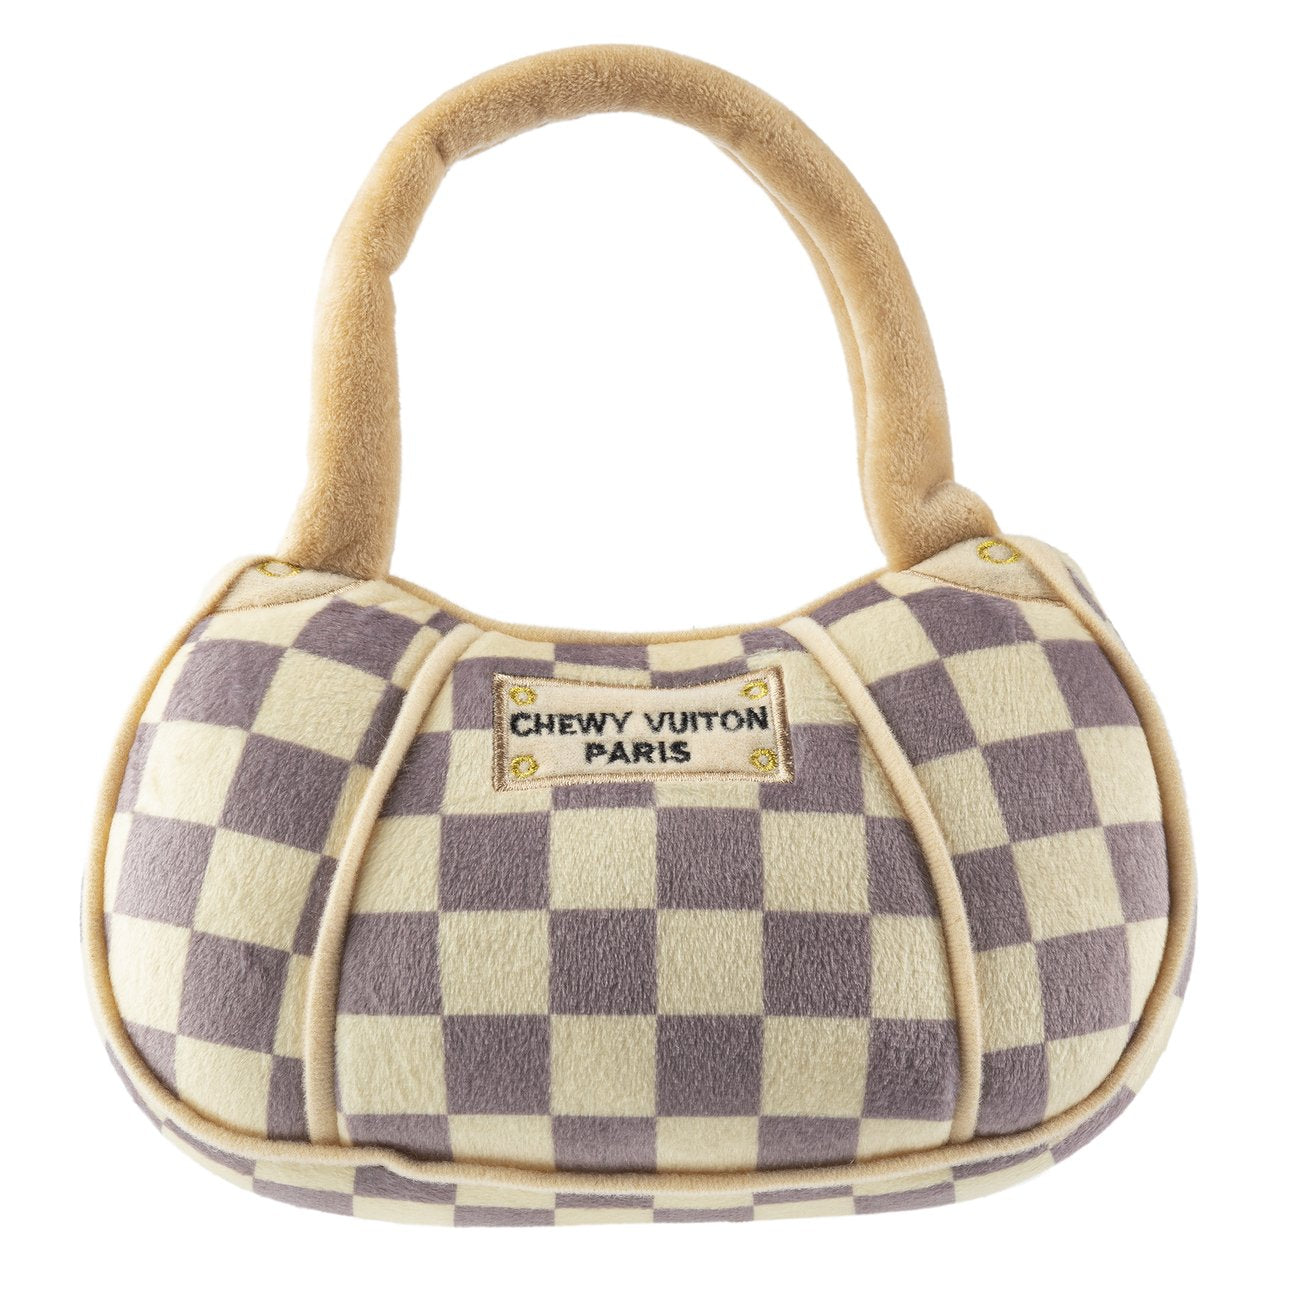 Chewy Vuiton Checkered Handbag